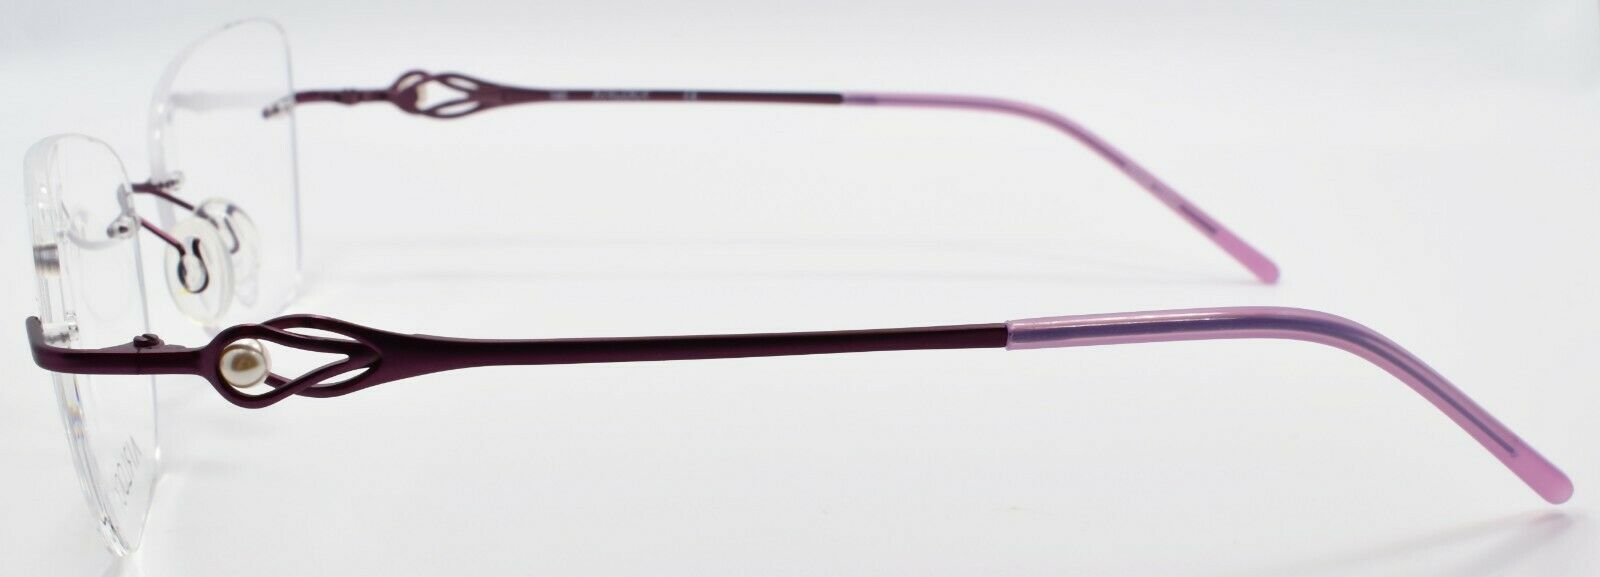 3-Airlock Majestic 203 500 Women's Eyeglasses Frames Rimless 54-18-140 Violet-886895347044-IKSpecs